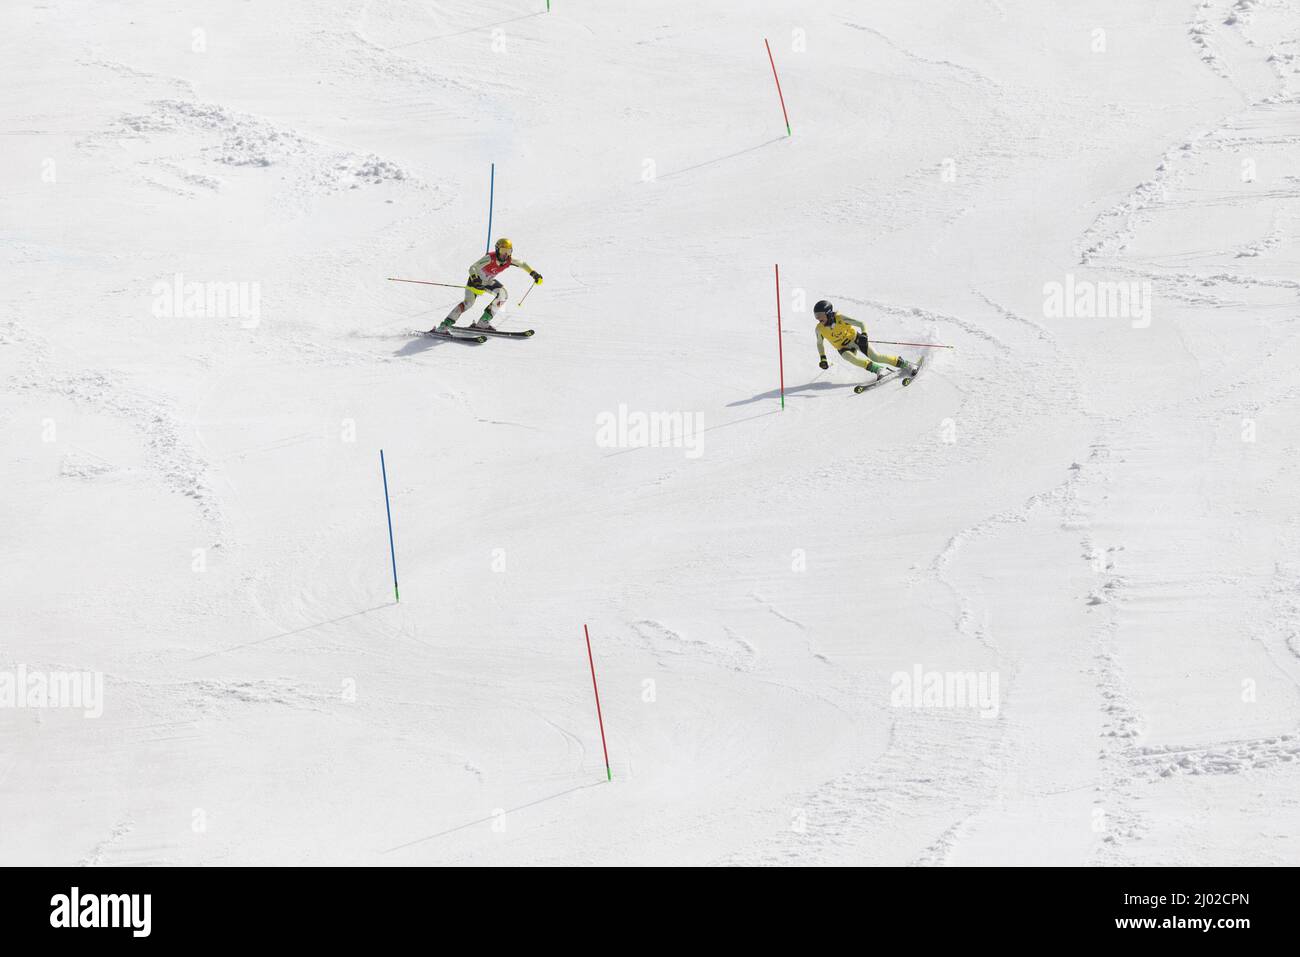 Yanqing (China) / National Alpine Center / 12.03.22  Para Ski Alpin, RISTAU, Noemi (GER) vom SSG Blista Marburg (HES) (hinten) mit Guide BRENZEL, Paul Stock Photo